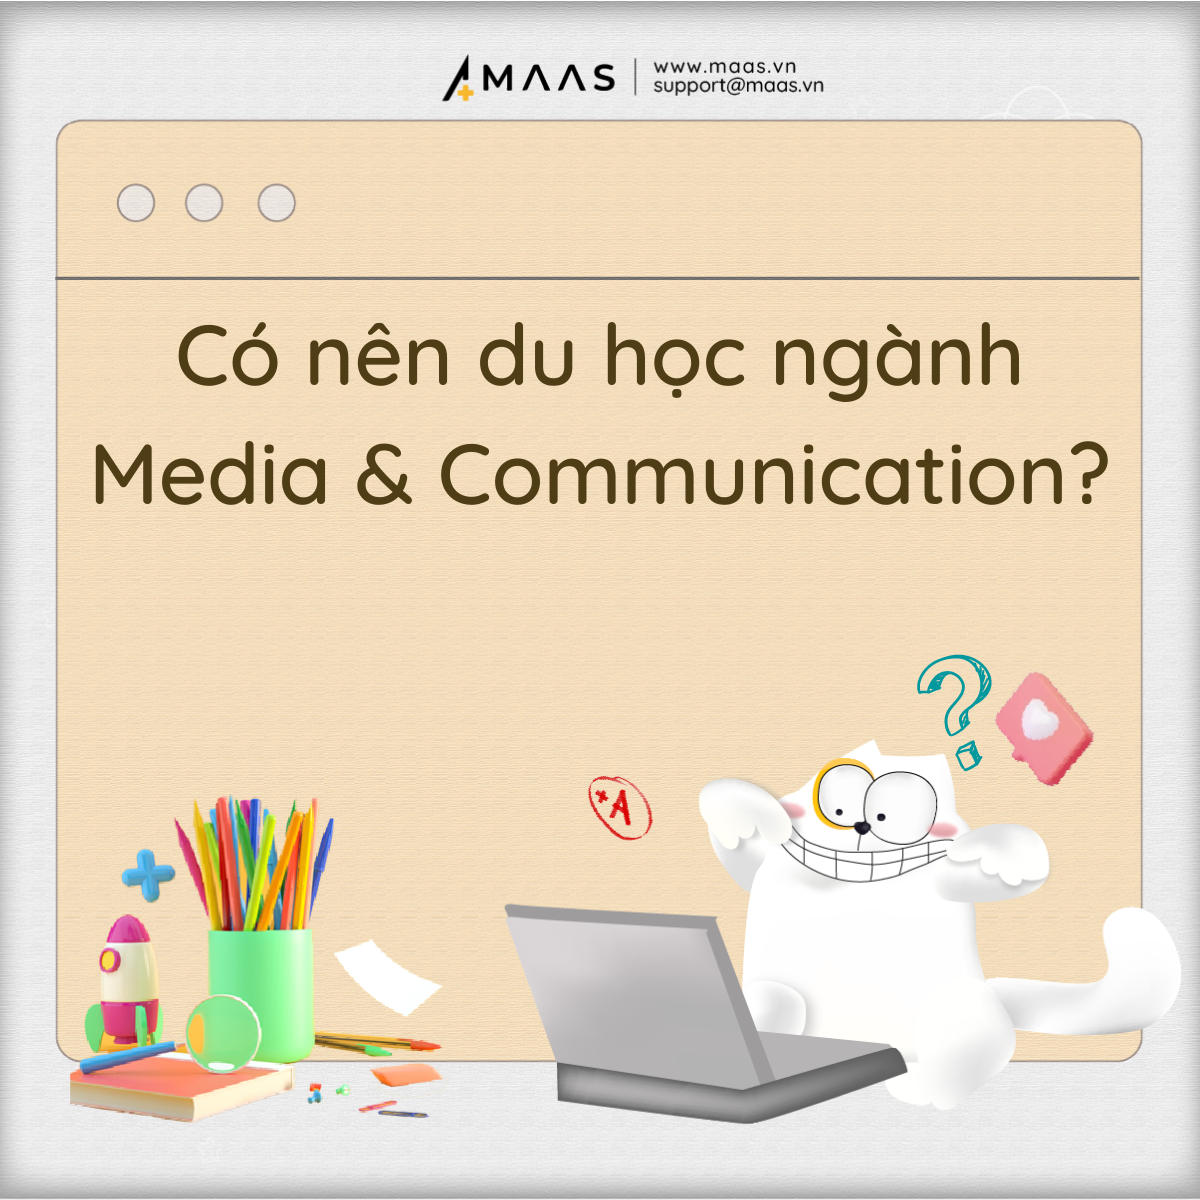 Media & Communication